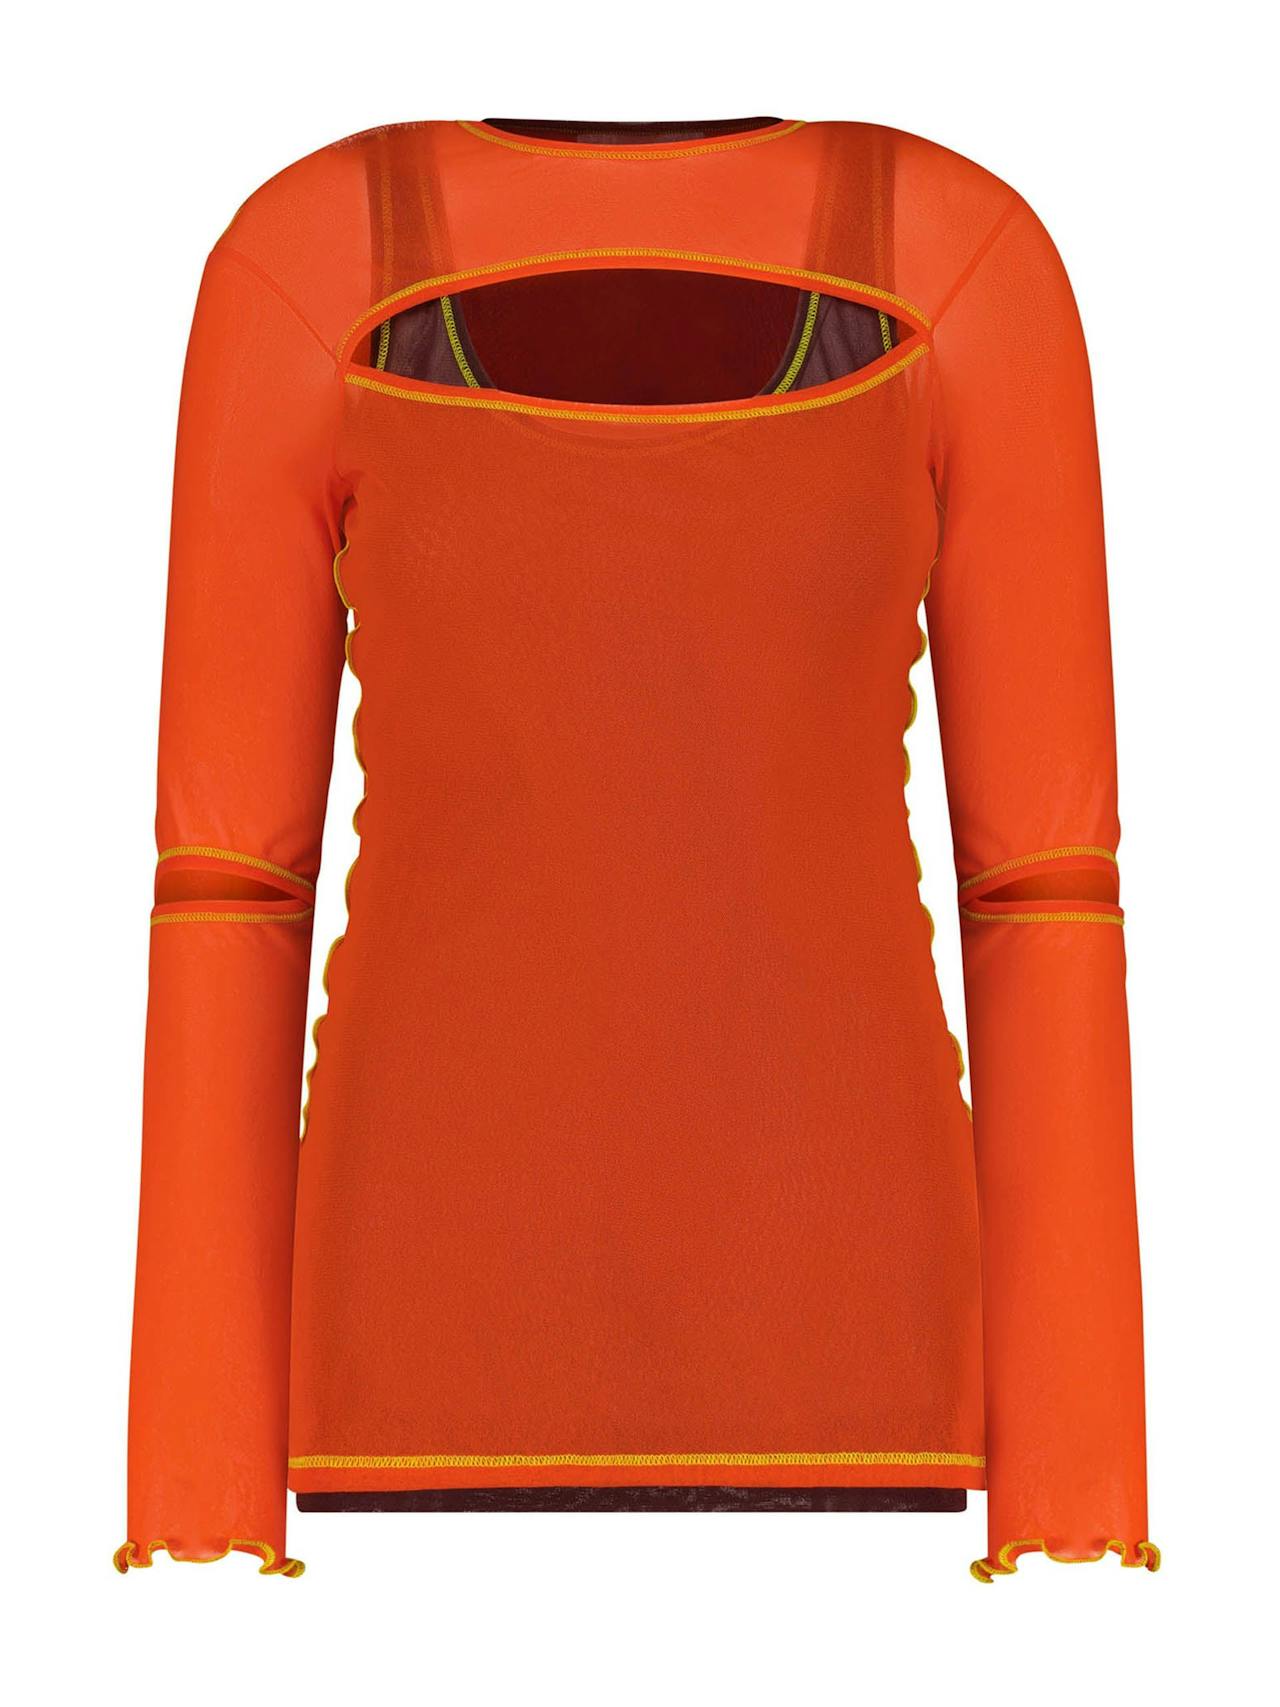 Orange layered long sleeve top